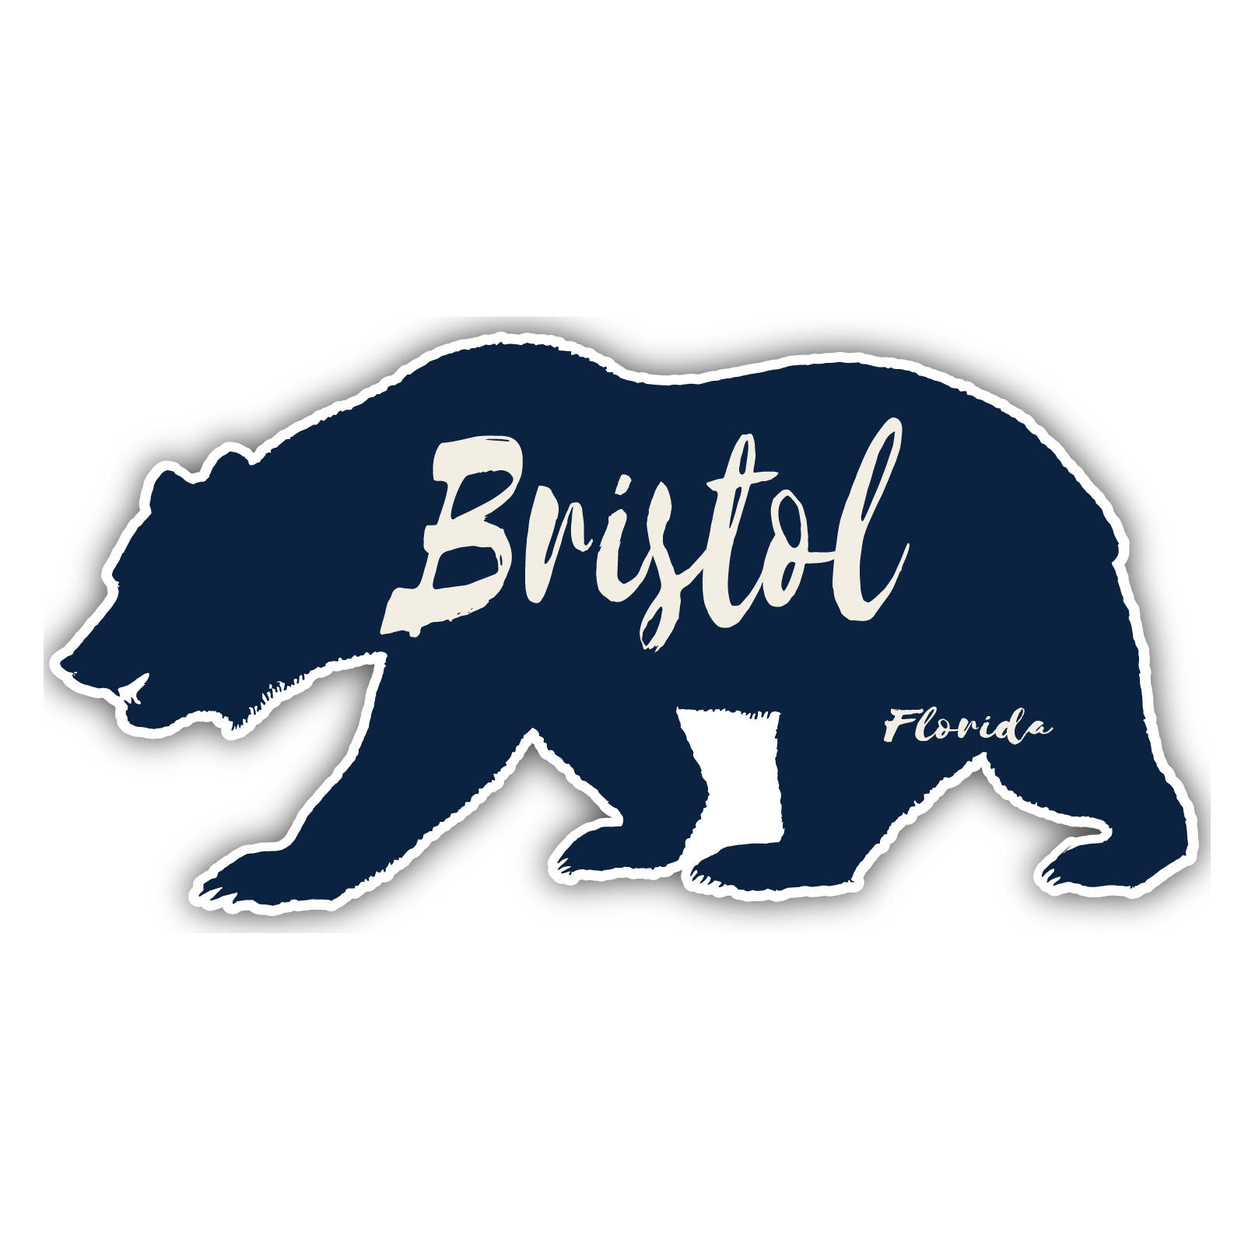 Bristol Florida Souvenir Decorative Stickers (Choose Theme And Size) - 4-Pack, 2-Inch, Bear